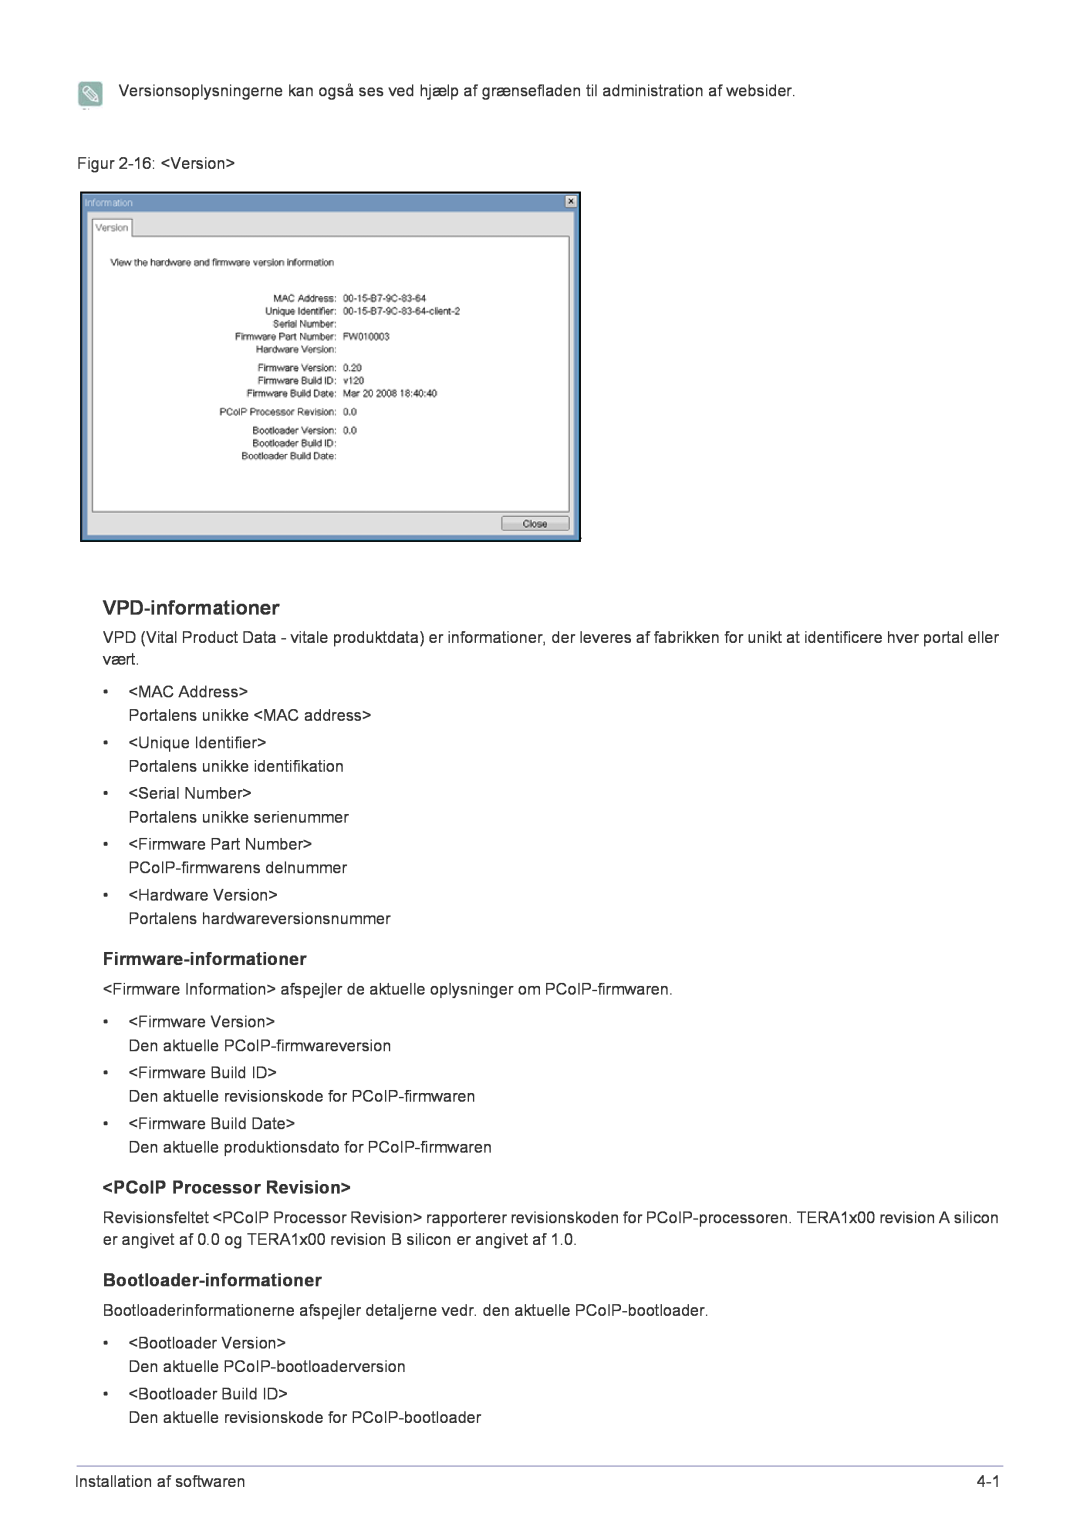 Samsung LF22NPBHBNP/EN manual VPD-informationer, Firmware-informationer, PCoIP Processor Revision, Bootloader-informationer 